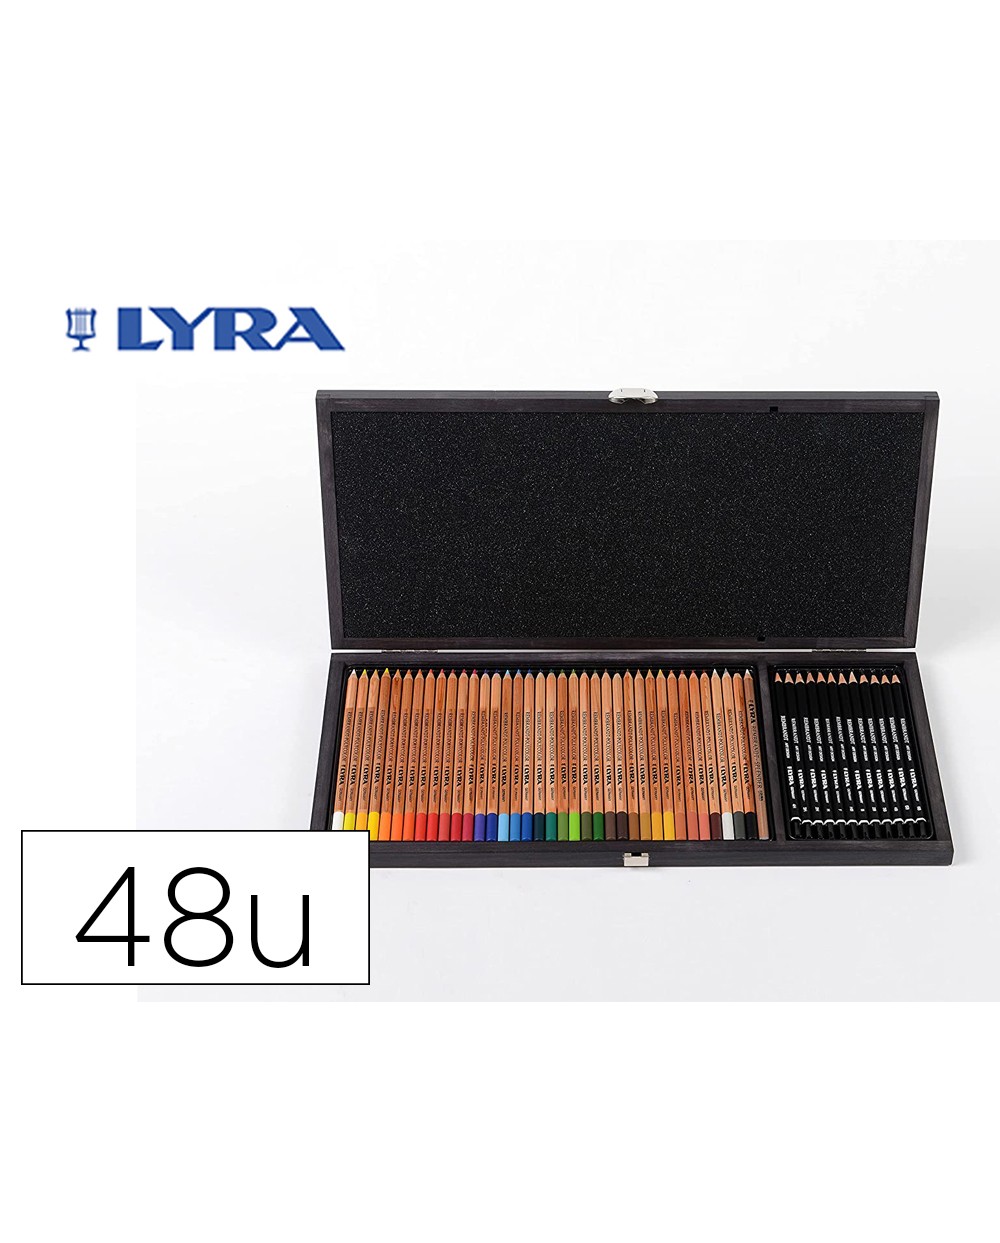 Lapices de colores lyra rembrandt polycolor 36 olores surtidos 12 lapices de grafito en maletin de madera